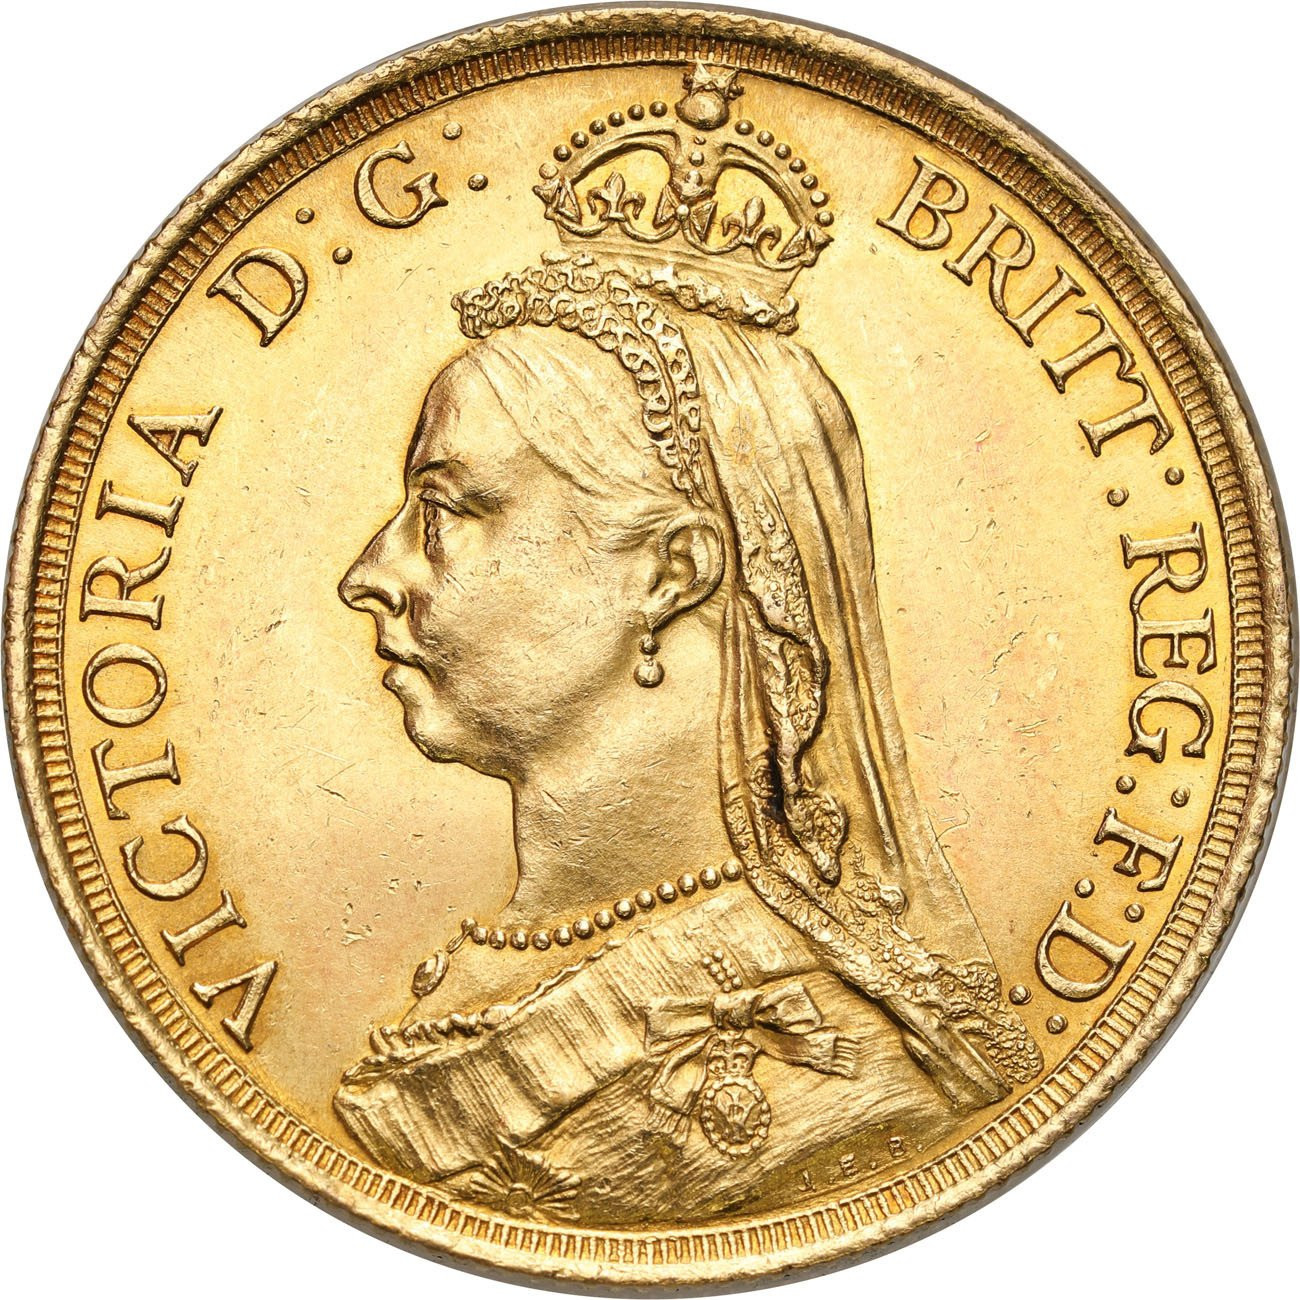 Wielka Brytania. 2 funty (suwereny) Victoria, 1887